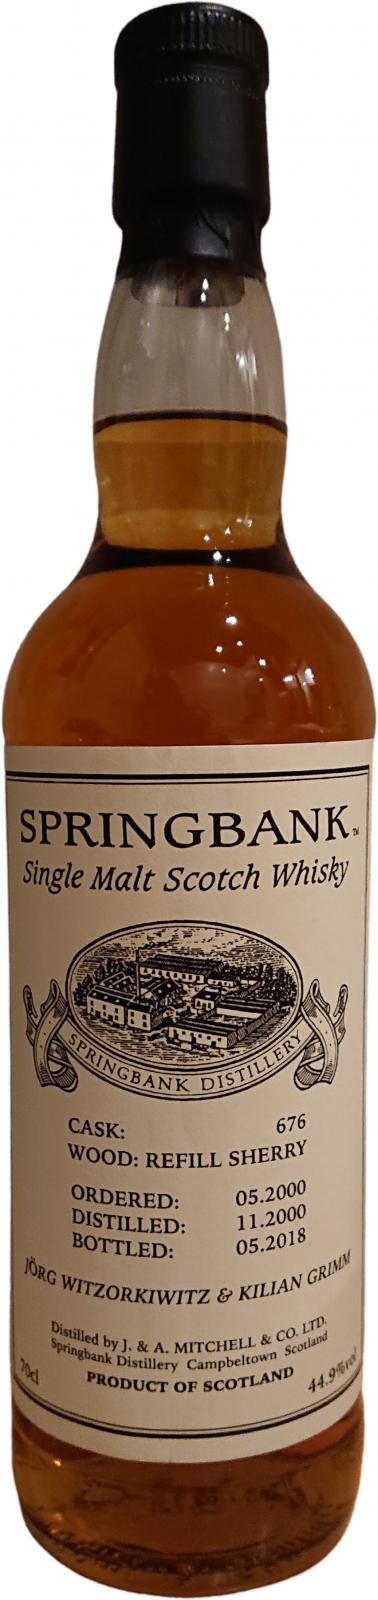 Springbank 2000 Private Bottling Refill Sherry #676 Jorg Witzorkiwitz & Kilian Grimm 44.9% 700ml